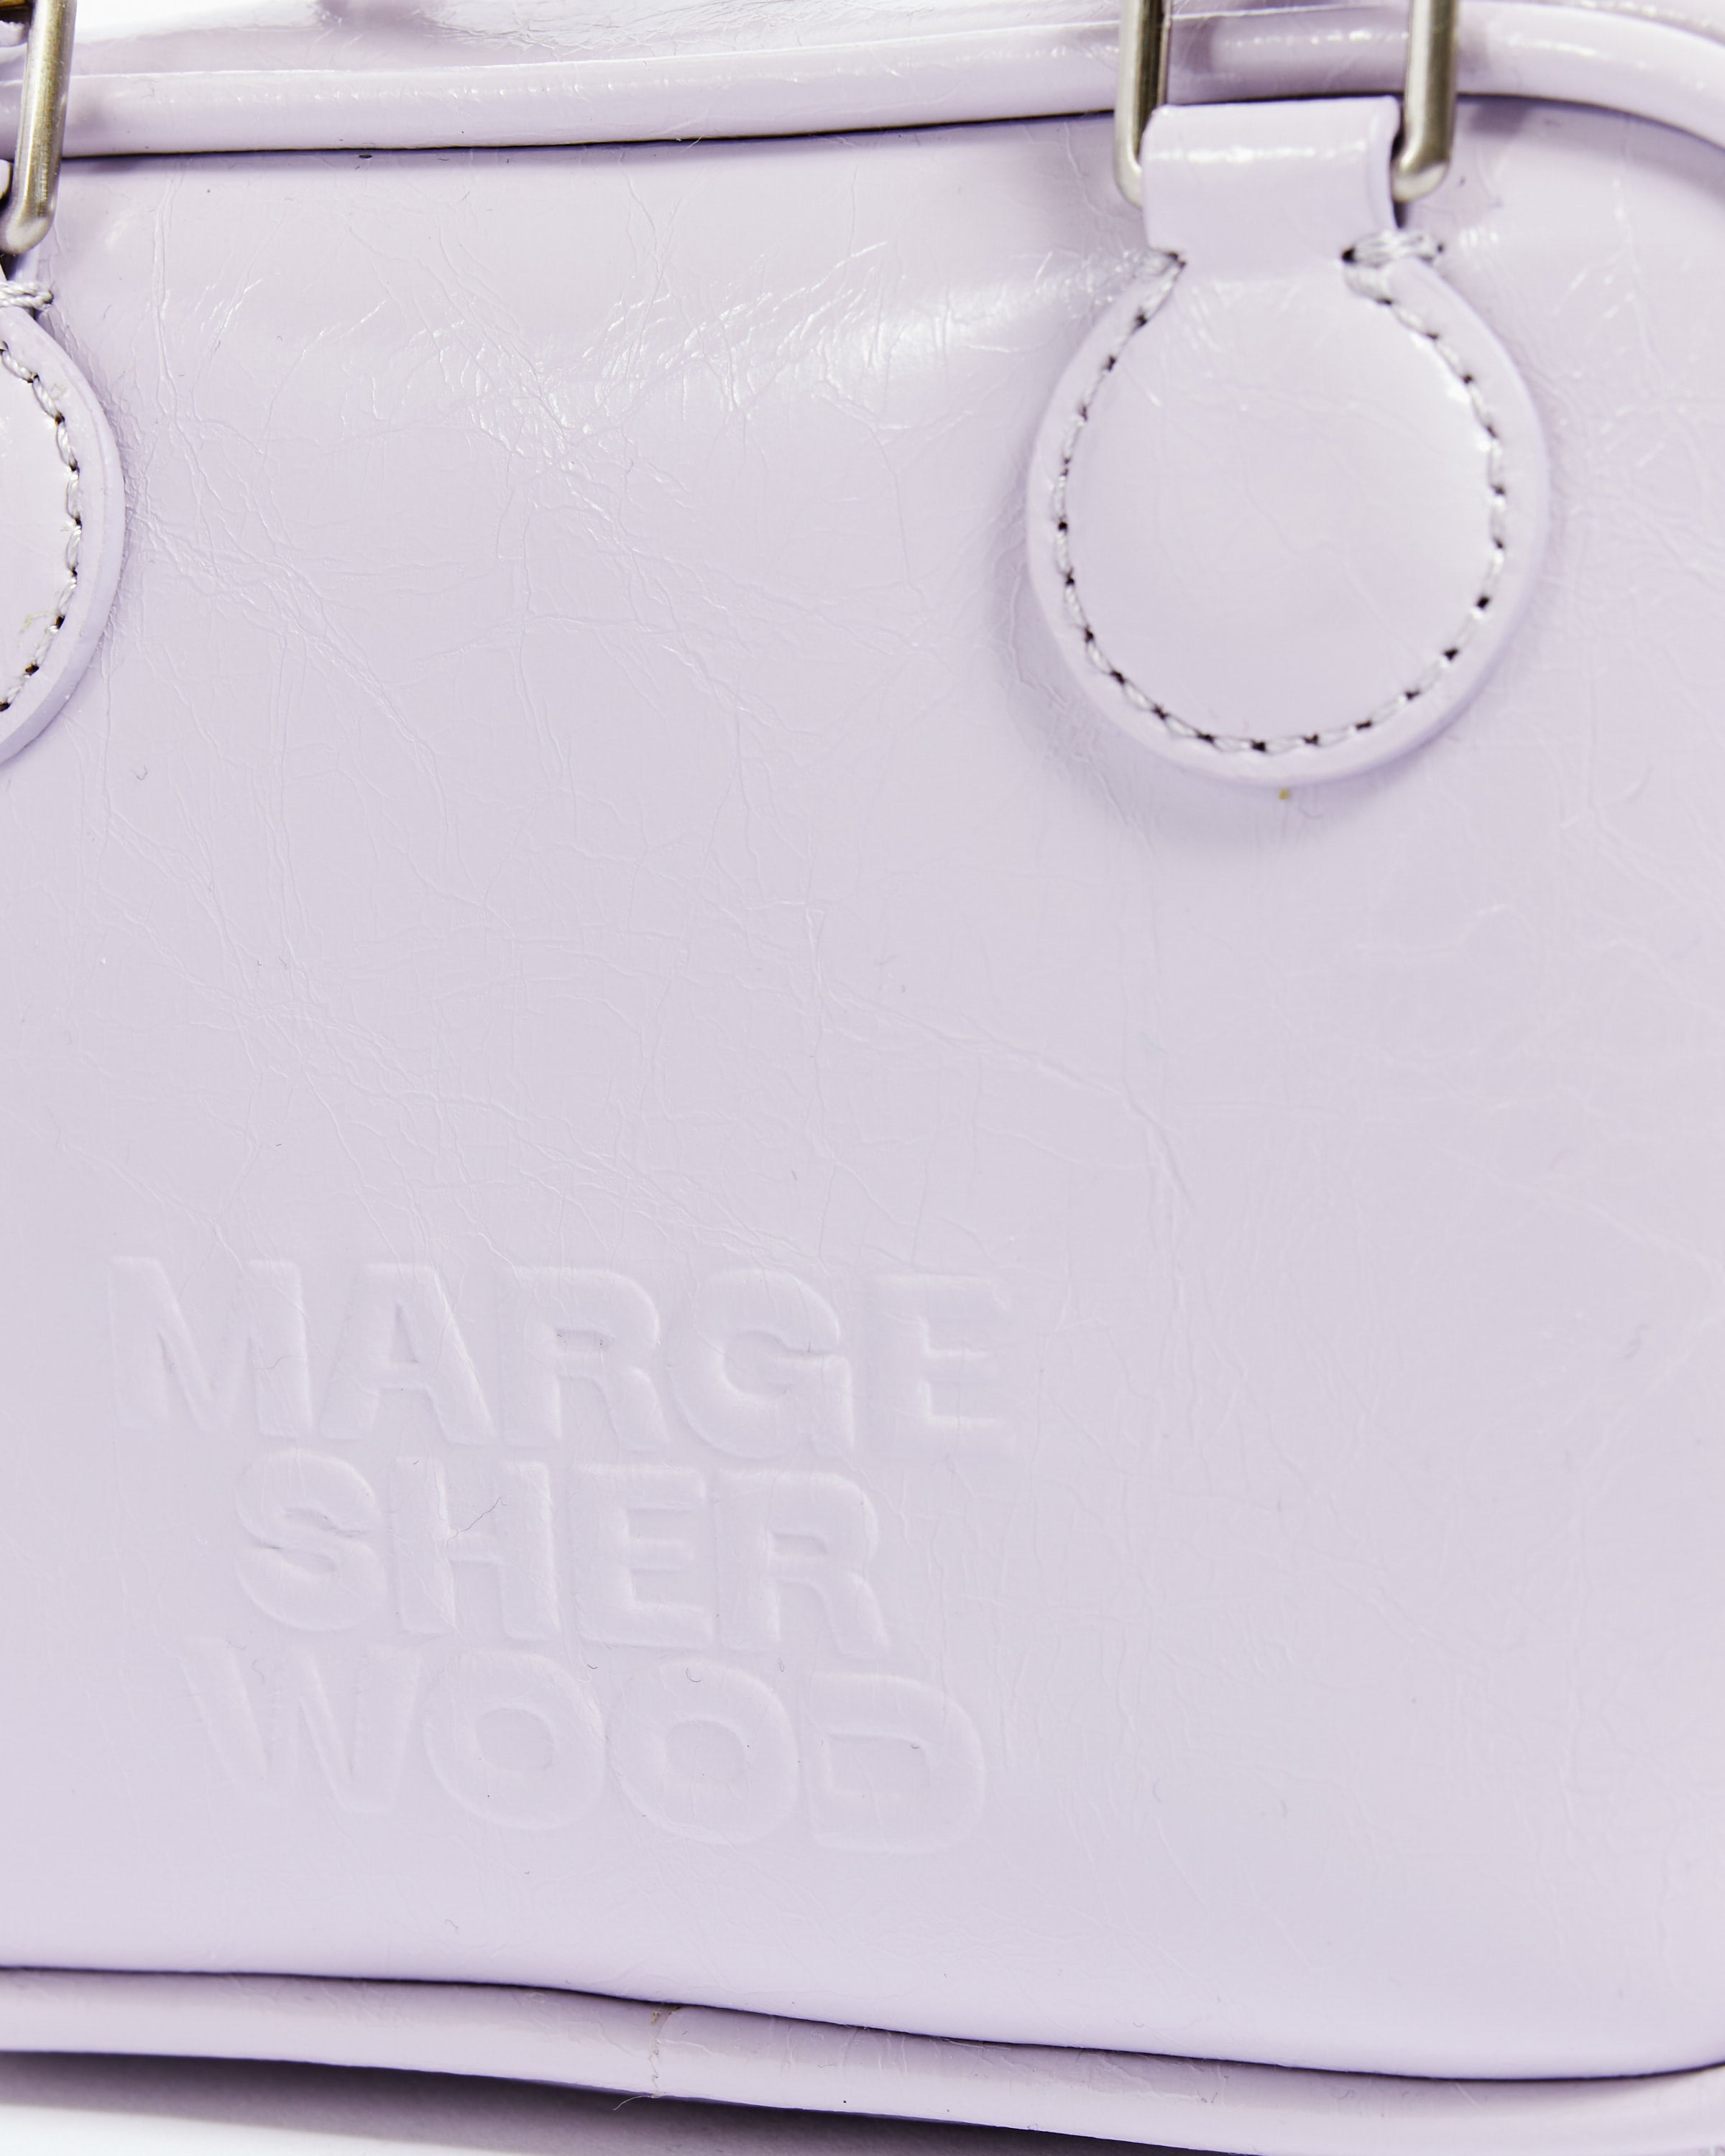 Marge Sherwood Silver Crinkled Leather Bag